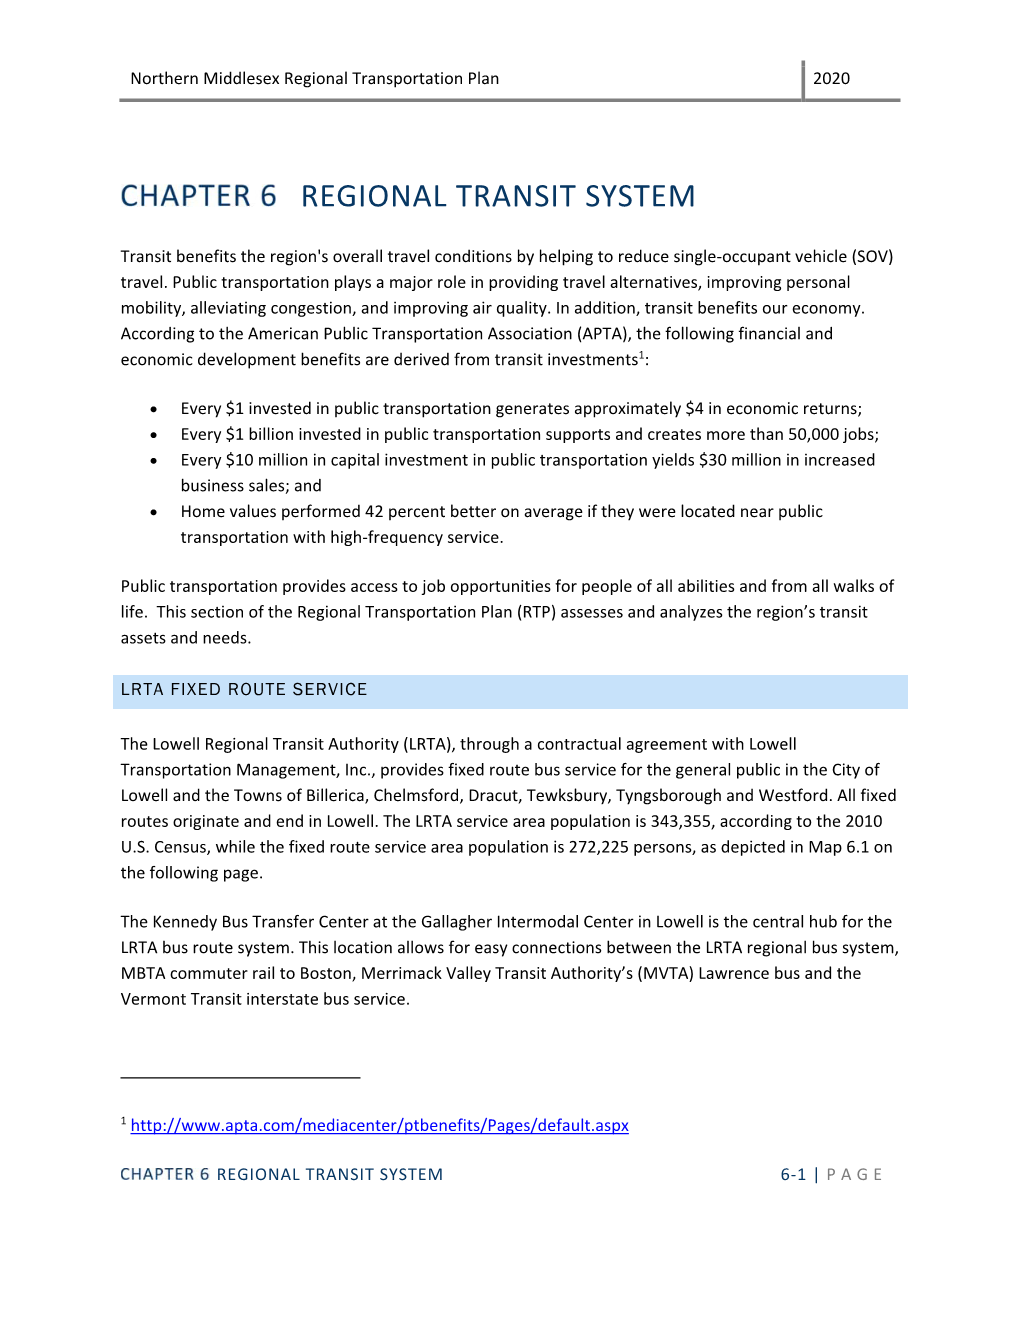 Regional Transit System